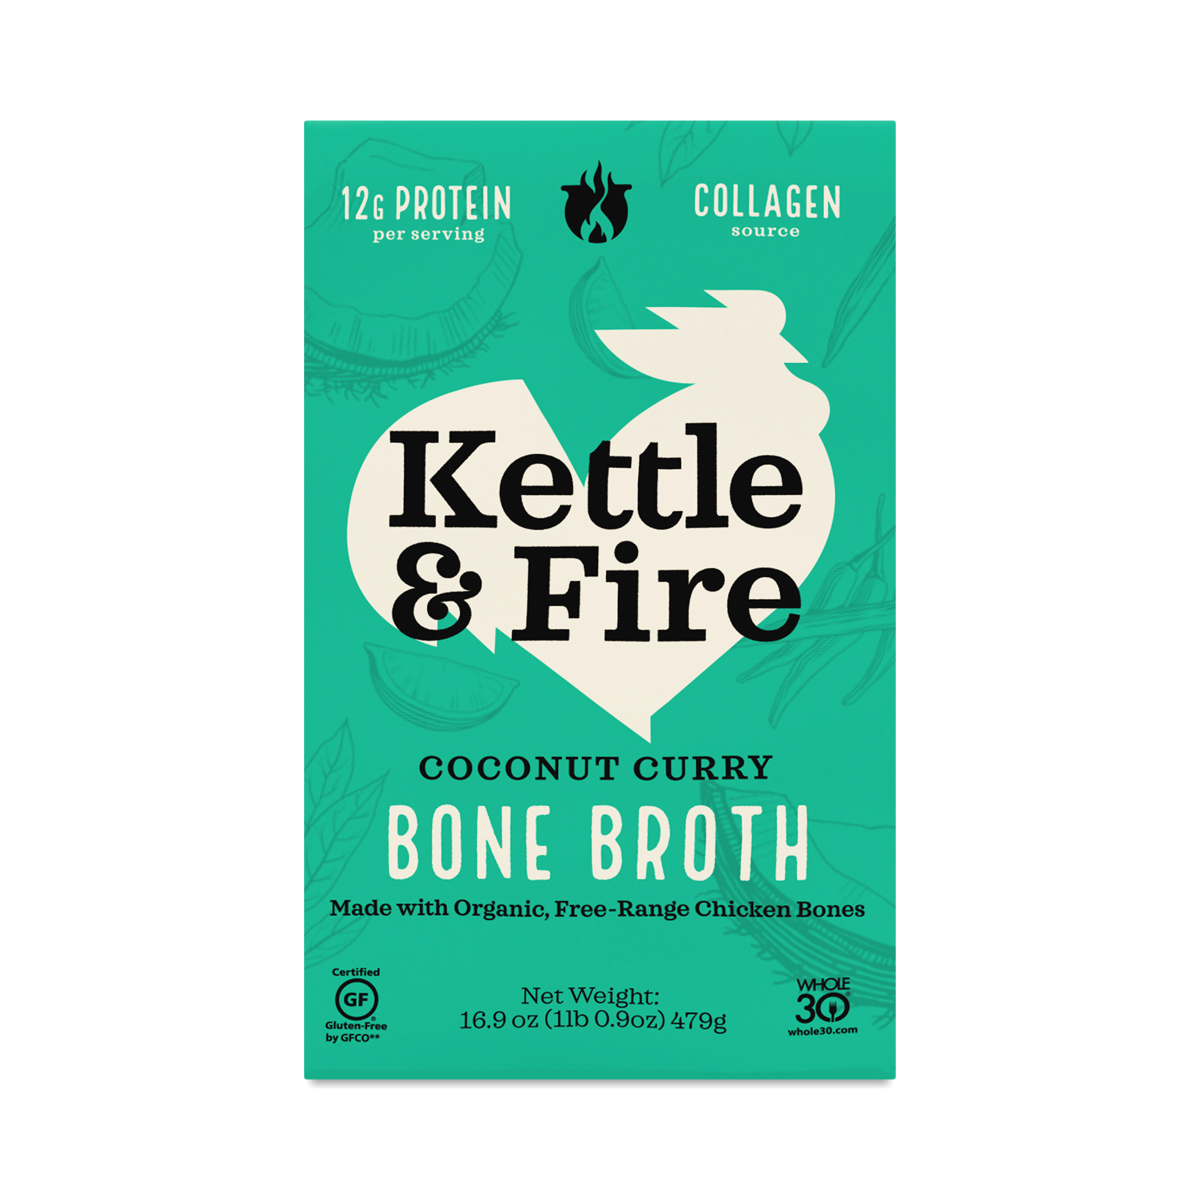 Kettle & Fire Bone Broth, Coconut Curry 16.9 oz carton